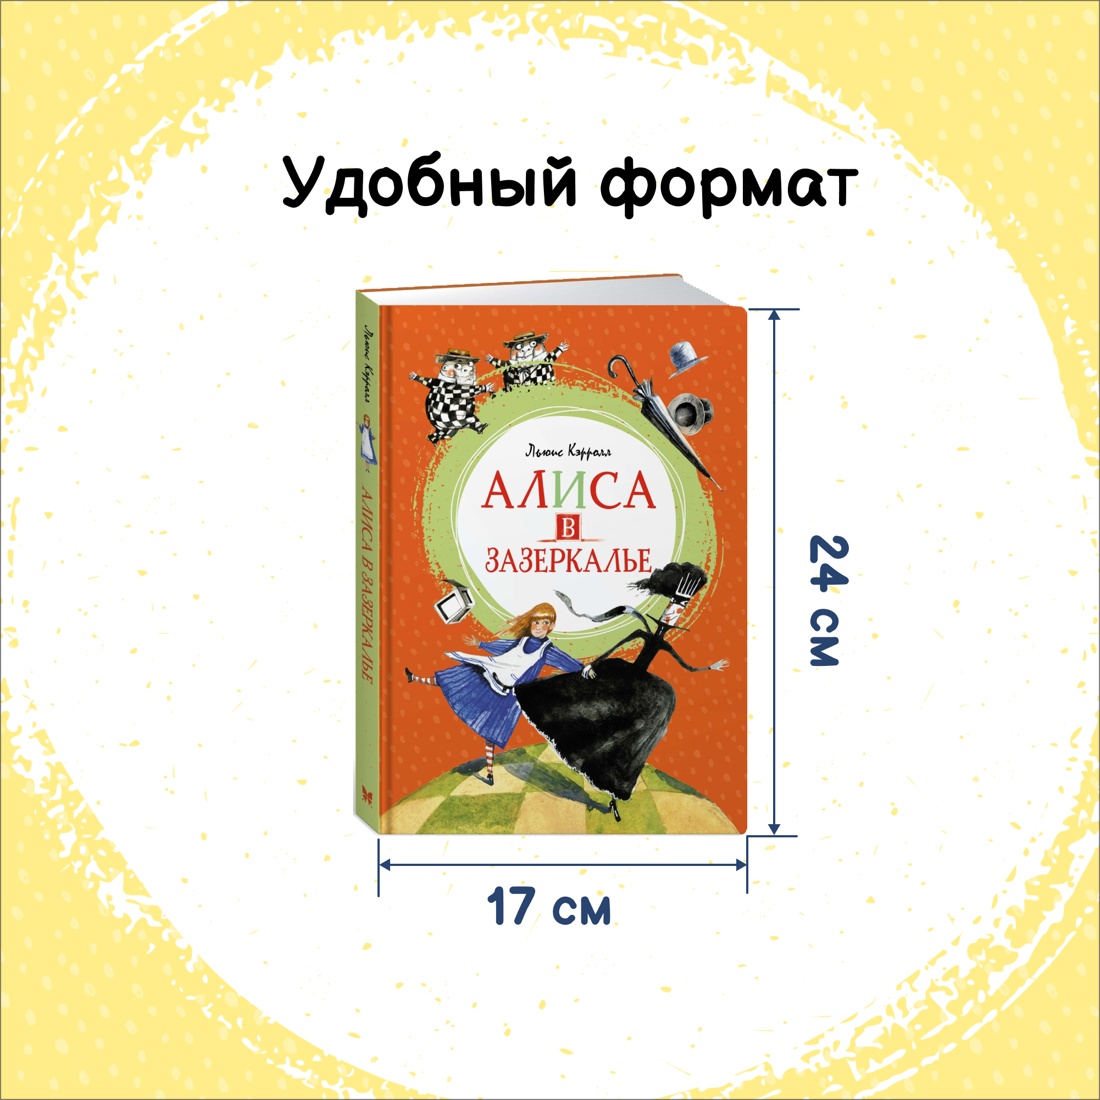 Промо материал к книге "Алиса в Зазеркалье" №1